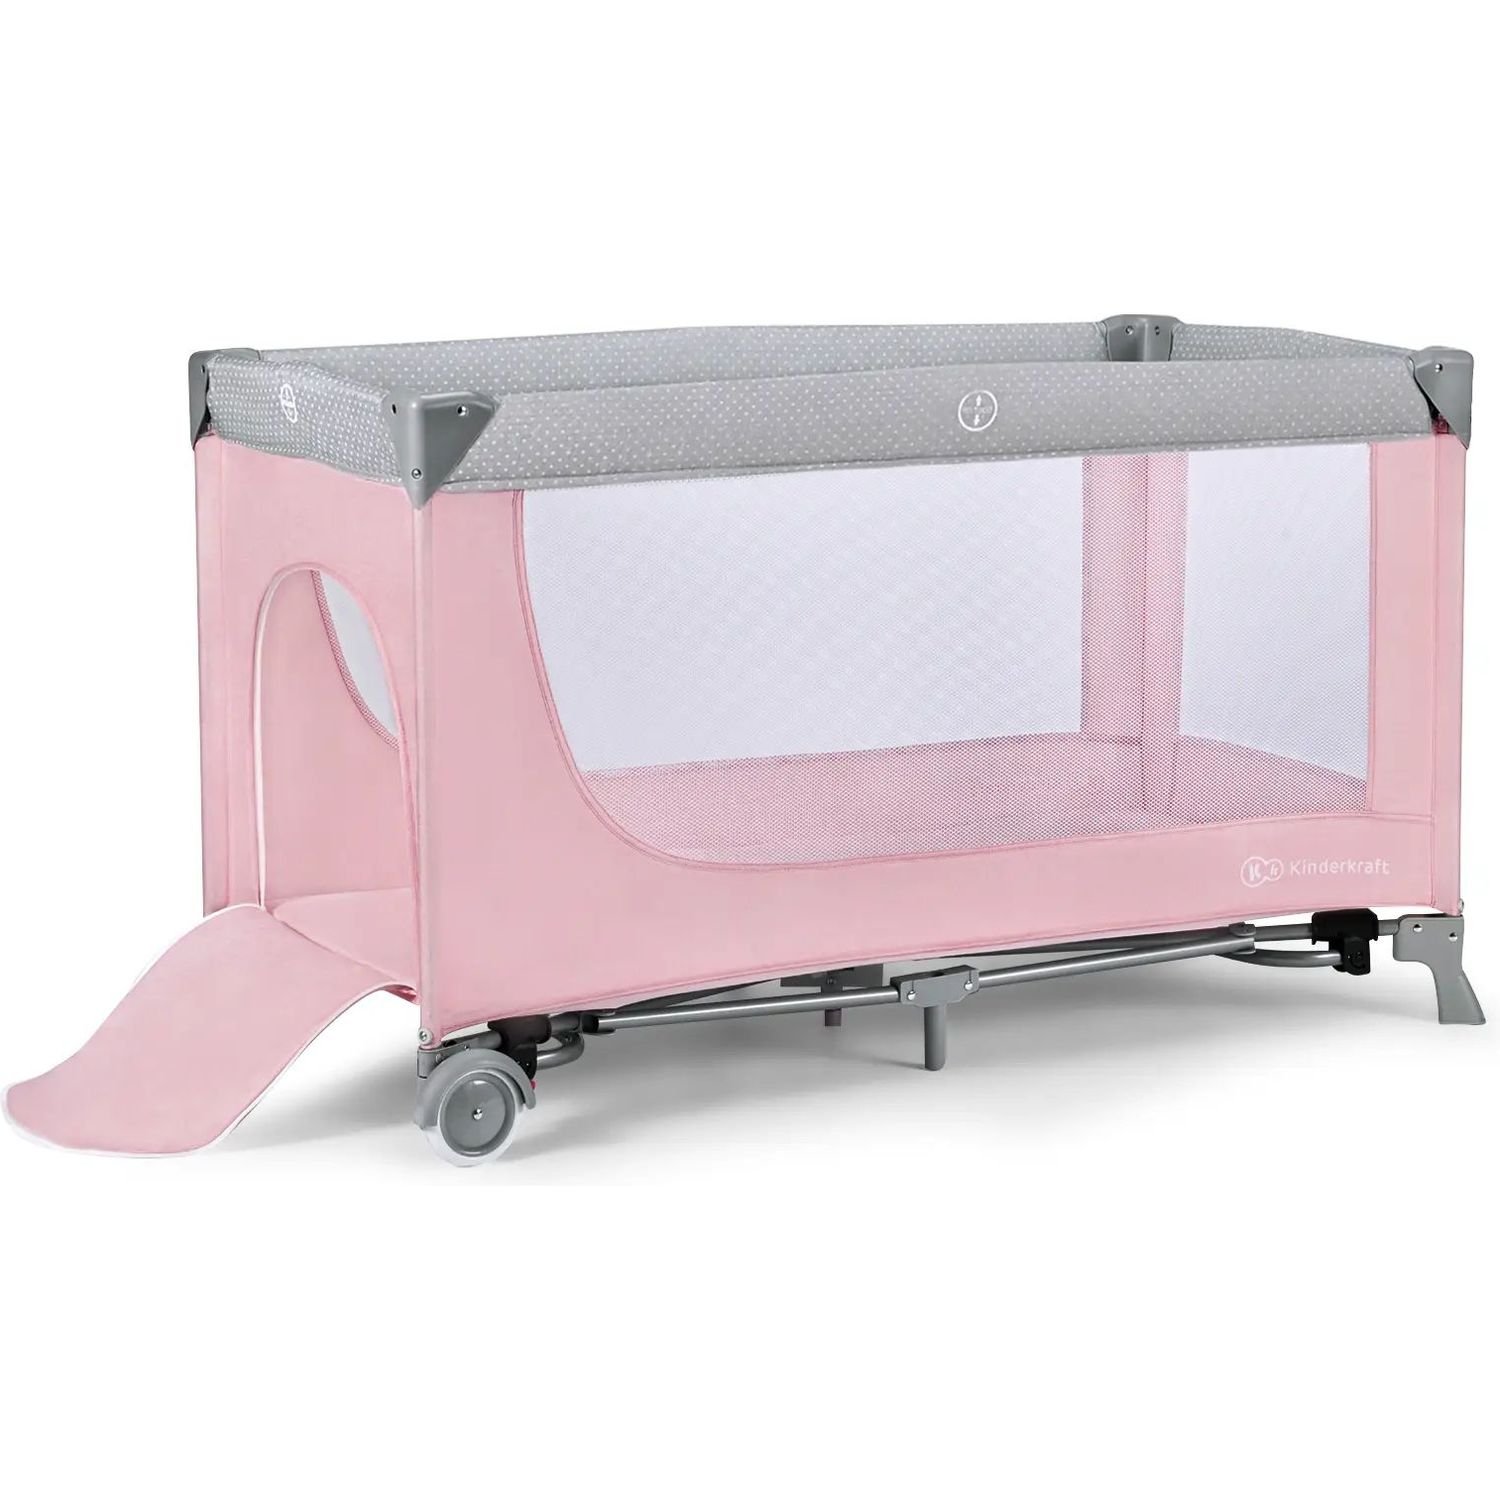 Кровать-манеж с пеленатором Kinderkraft Leody розовая (00-00304811) - фото 6